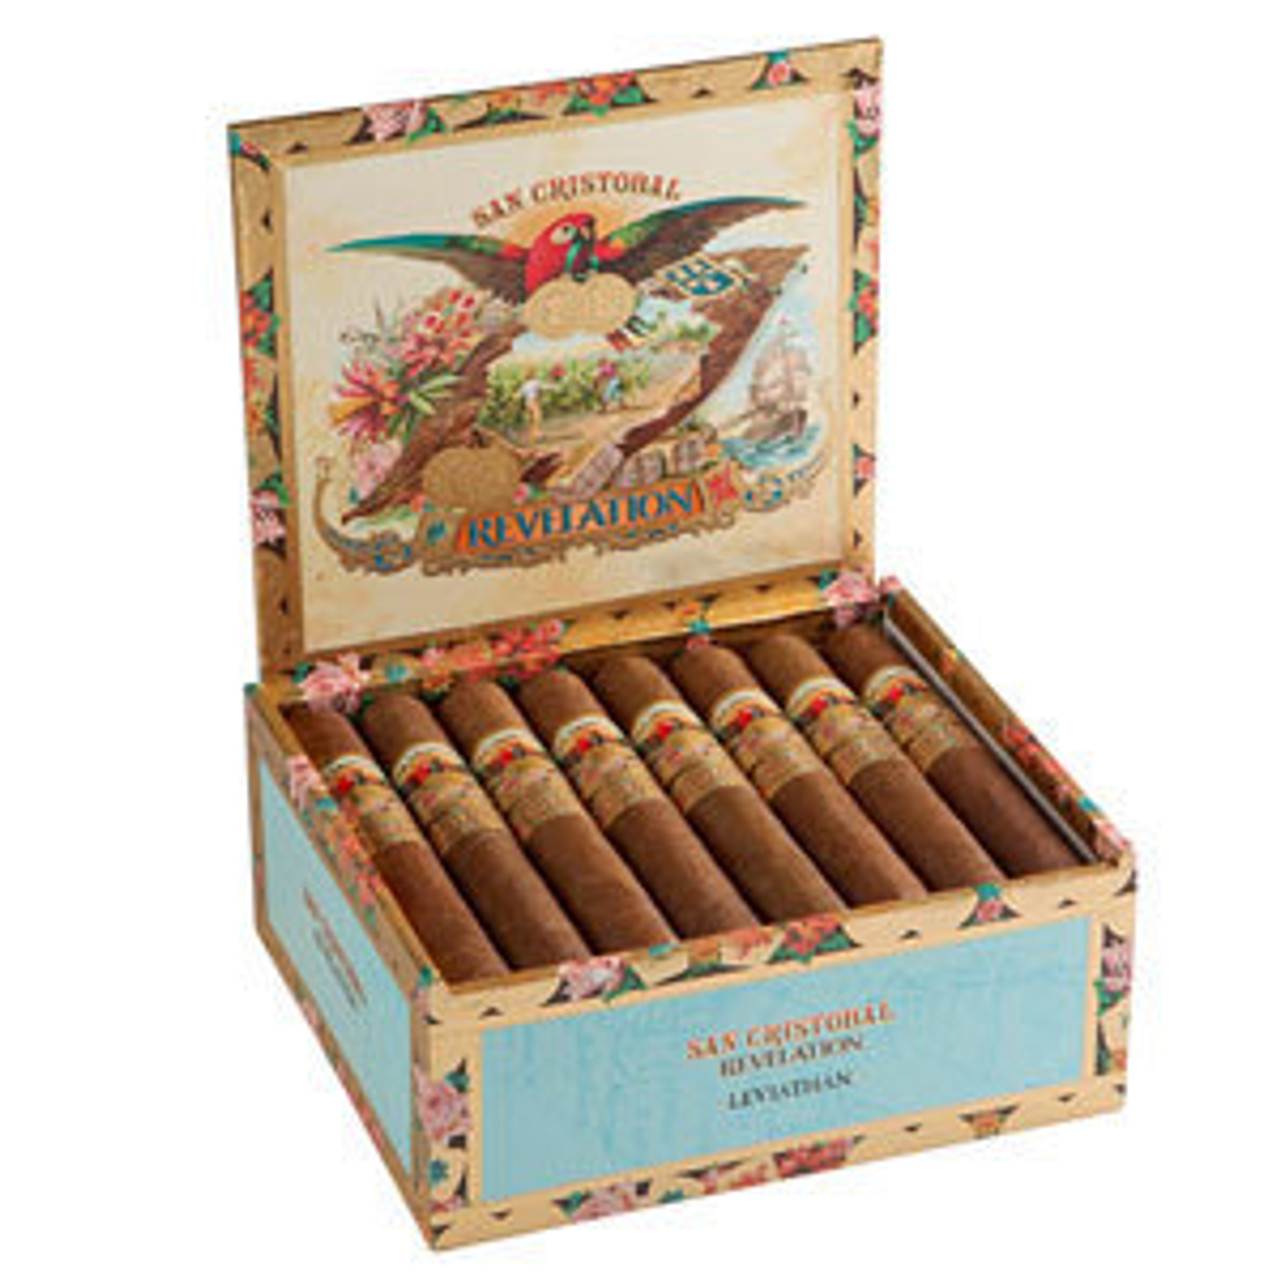 San Cristobal Revelation Legend Cigars - 6.25 x 52 (Box of 24) *Box